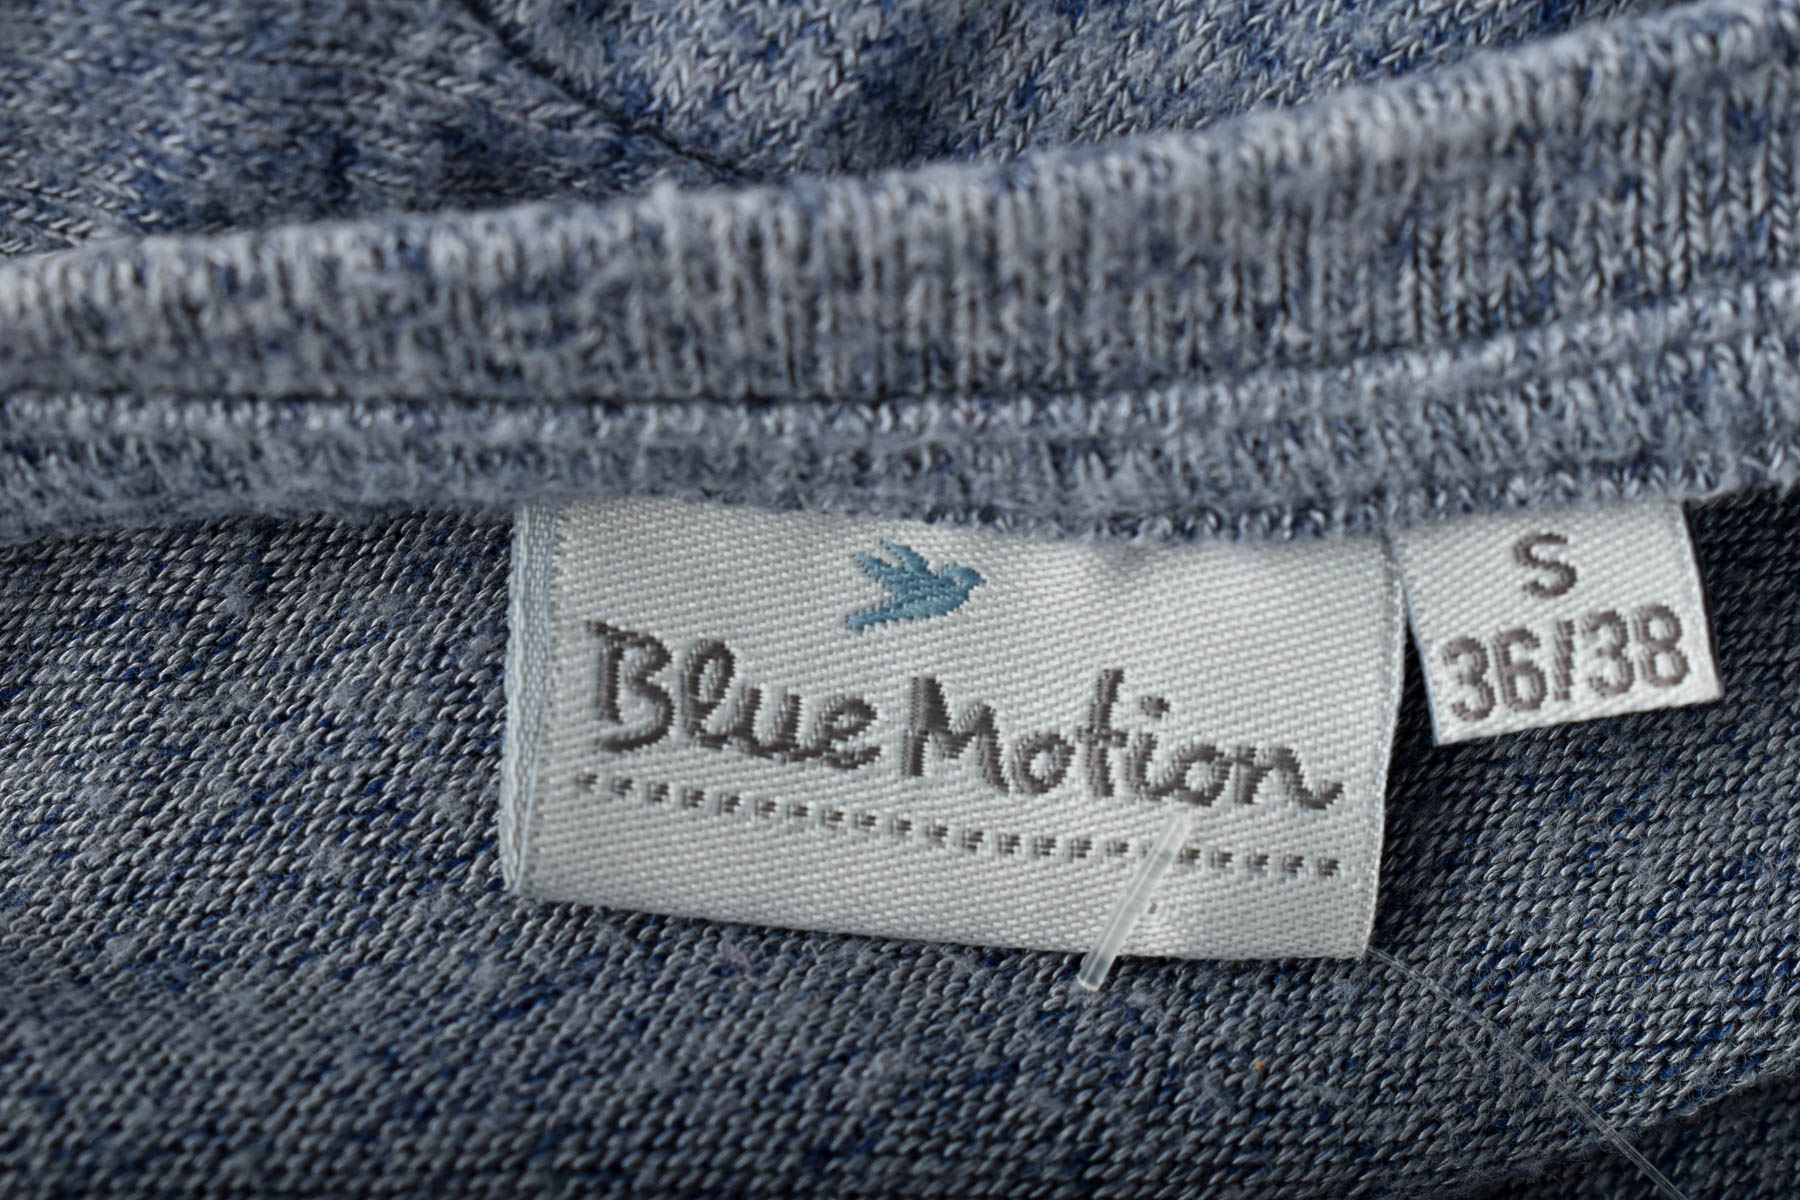 Dress - Blue Motion - 2